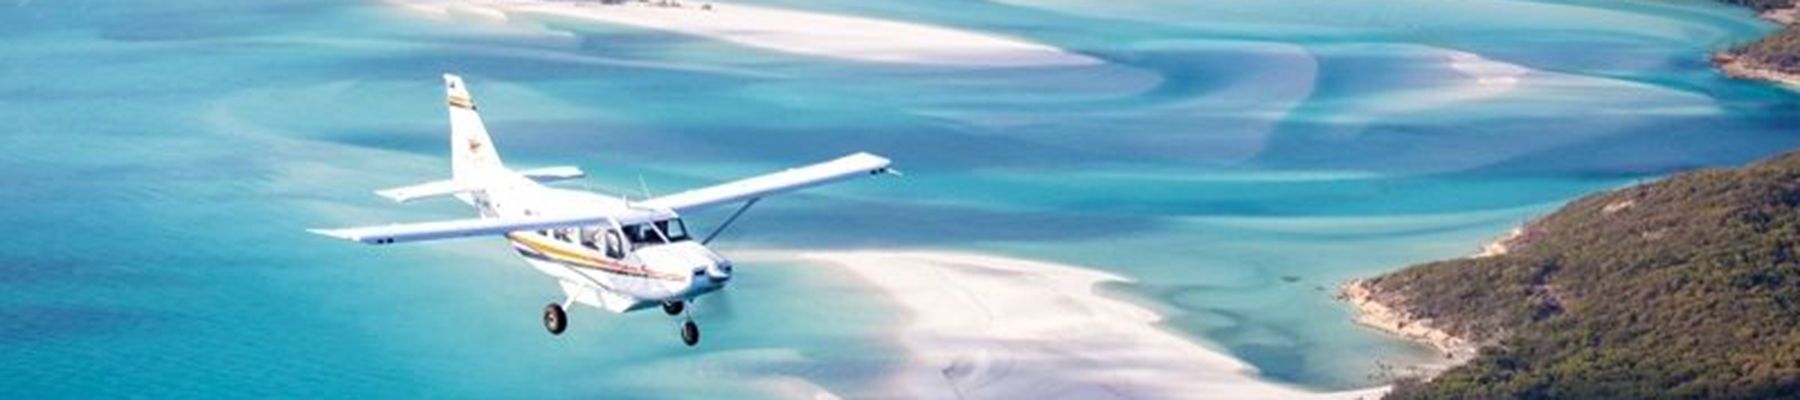 GSL scenic flight seaplane gliding over reefs and islands